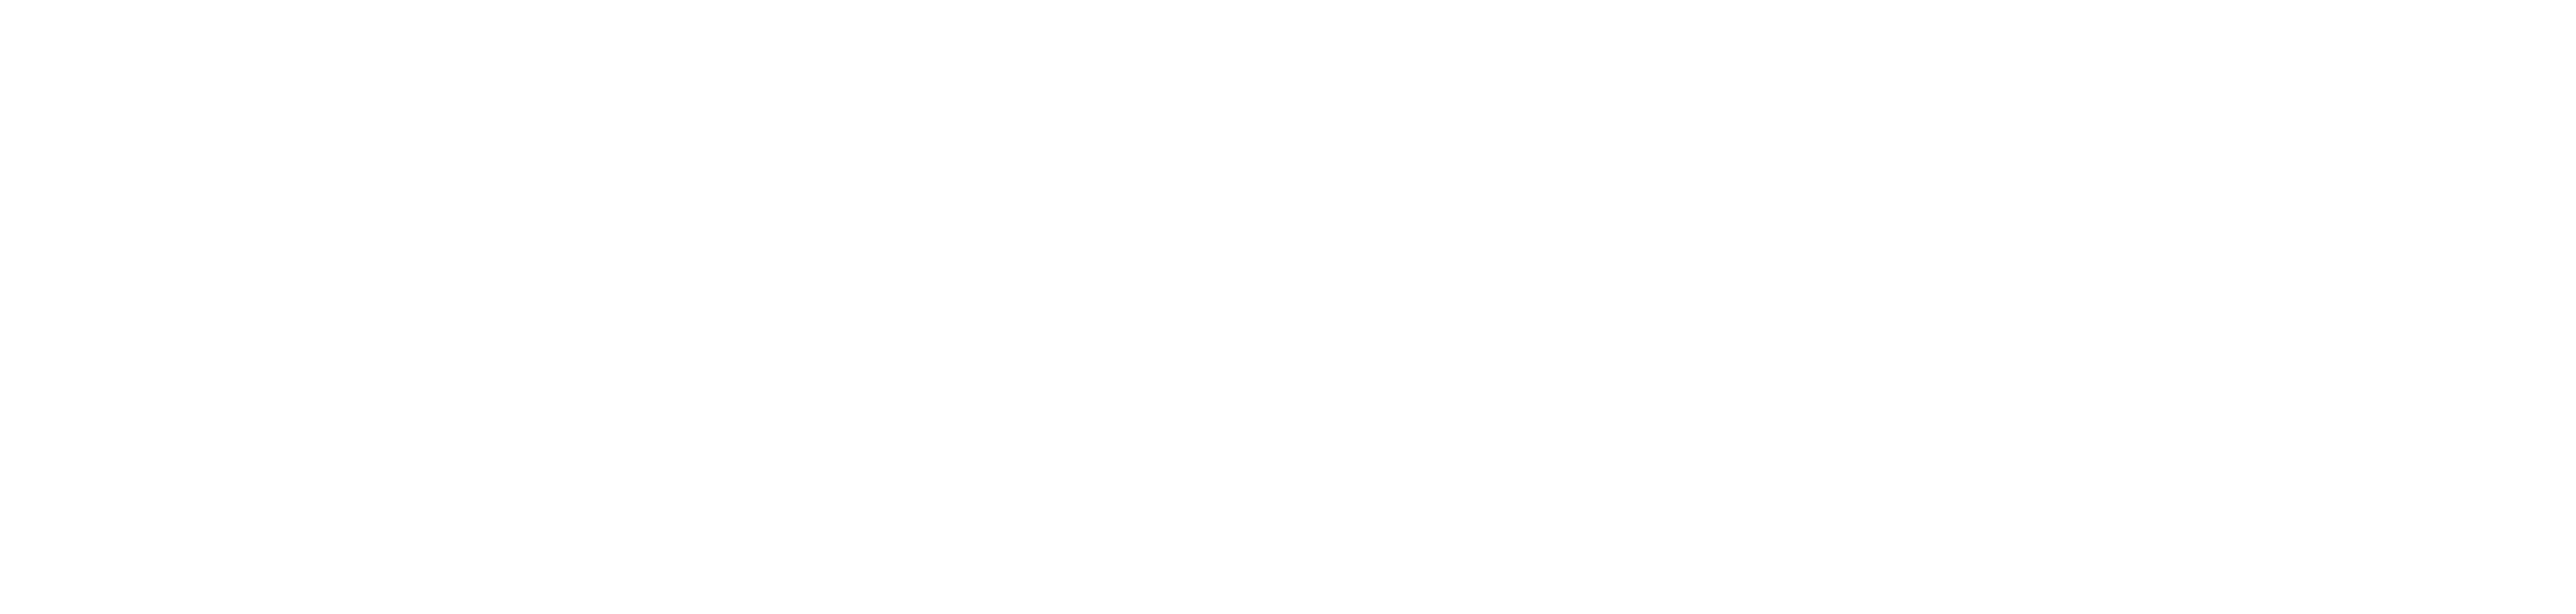 Advanced Micro Devices Inc logo